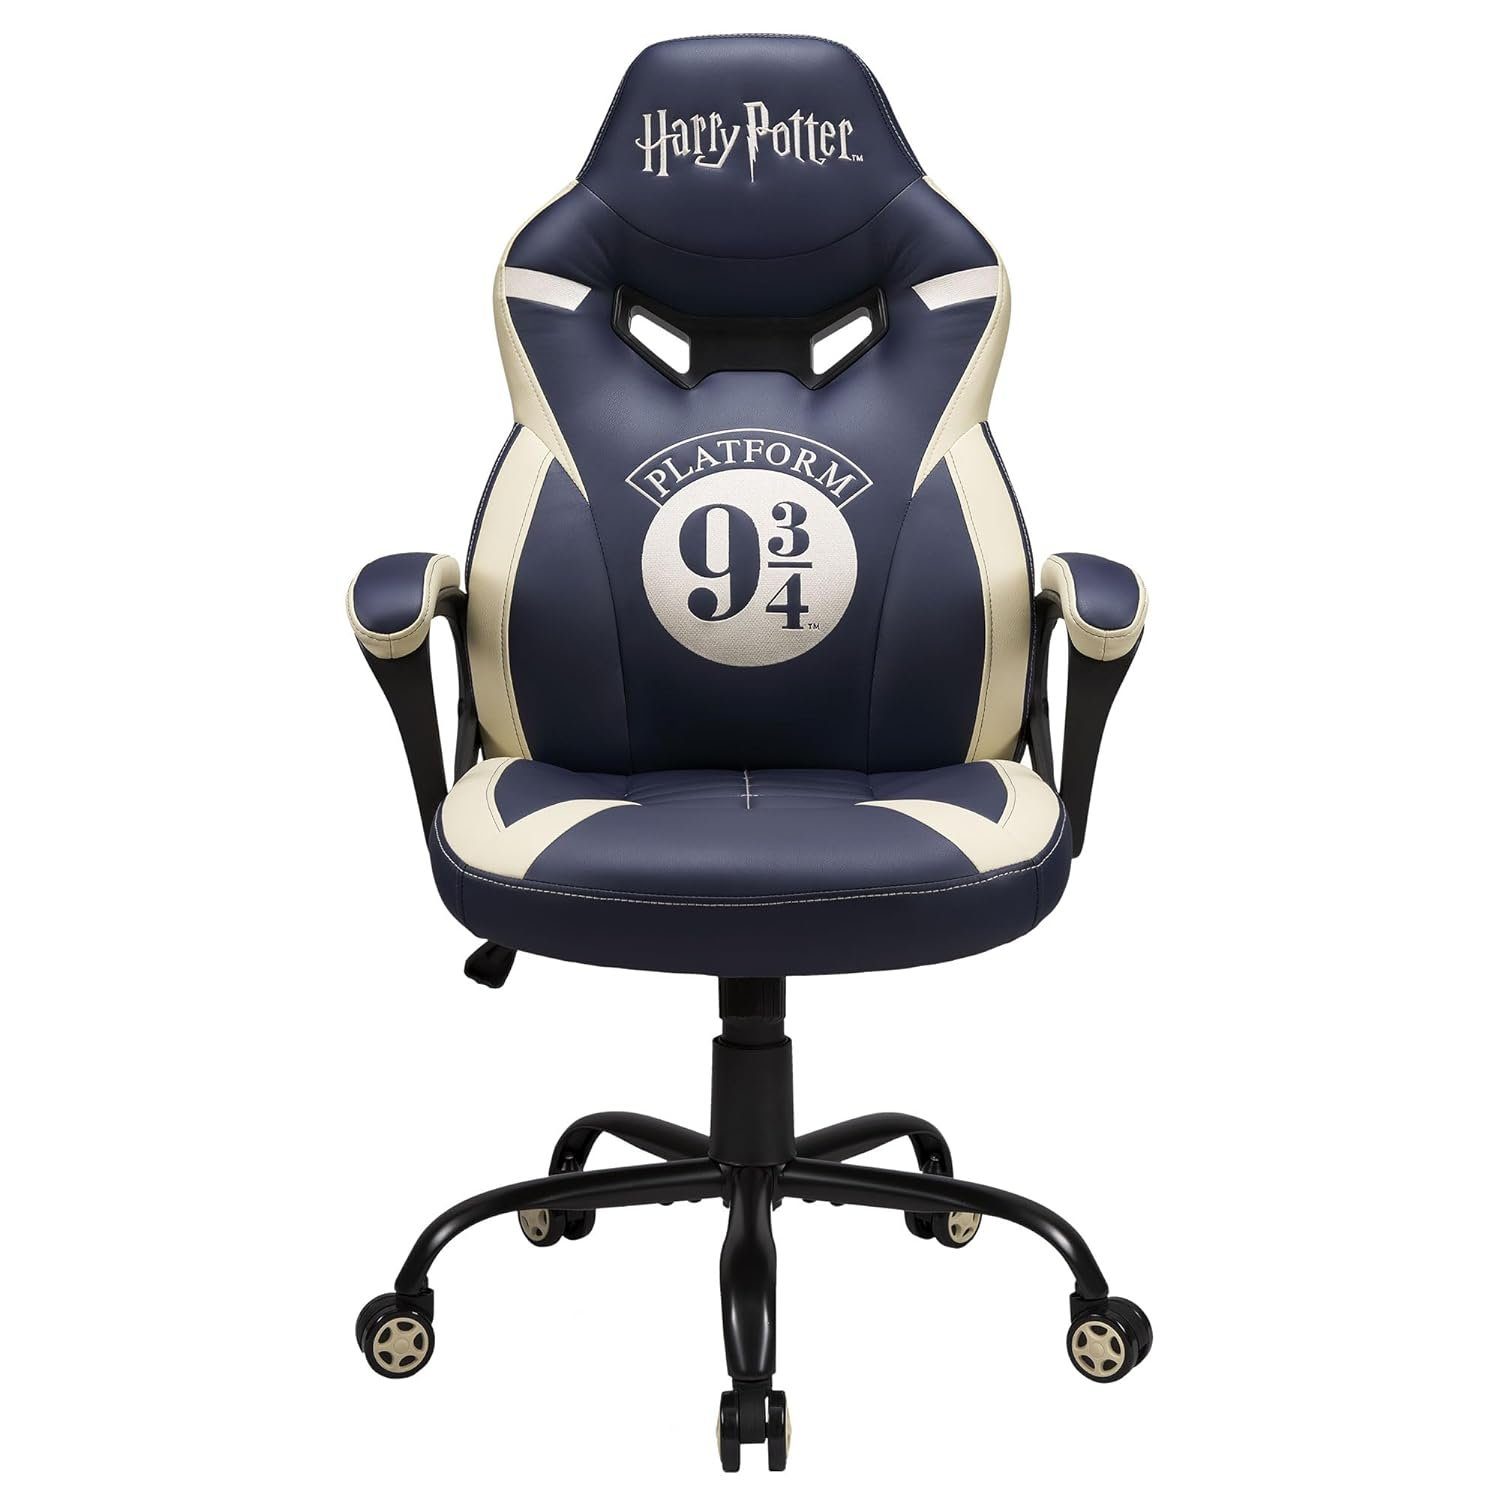 Subsonic Gaming-Stuhl Harry Potter - Junior Gaming Stuhl / Chair / Sessel - Gleis 9 3/4 (1 St)